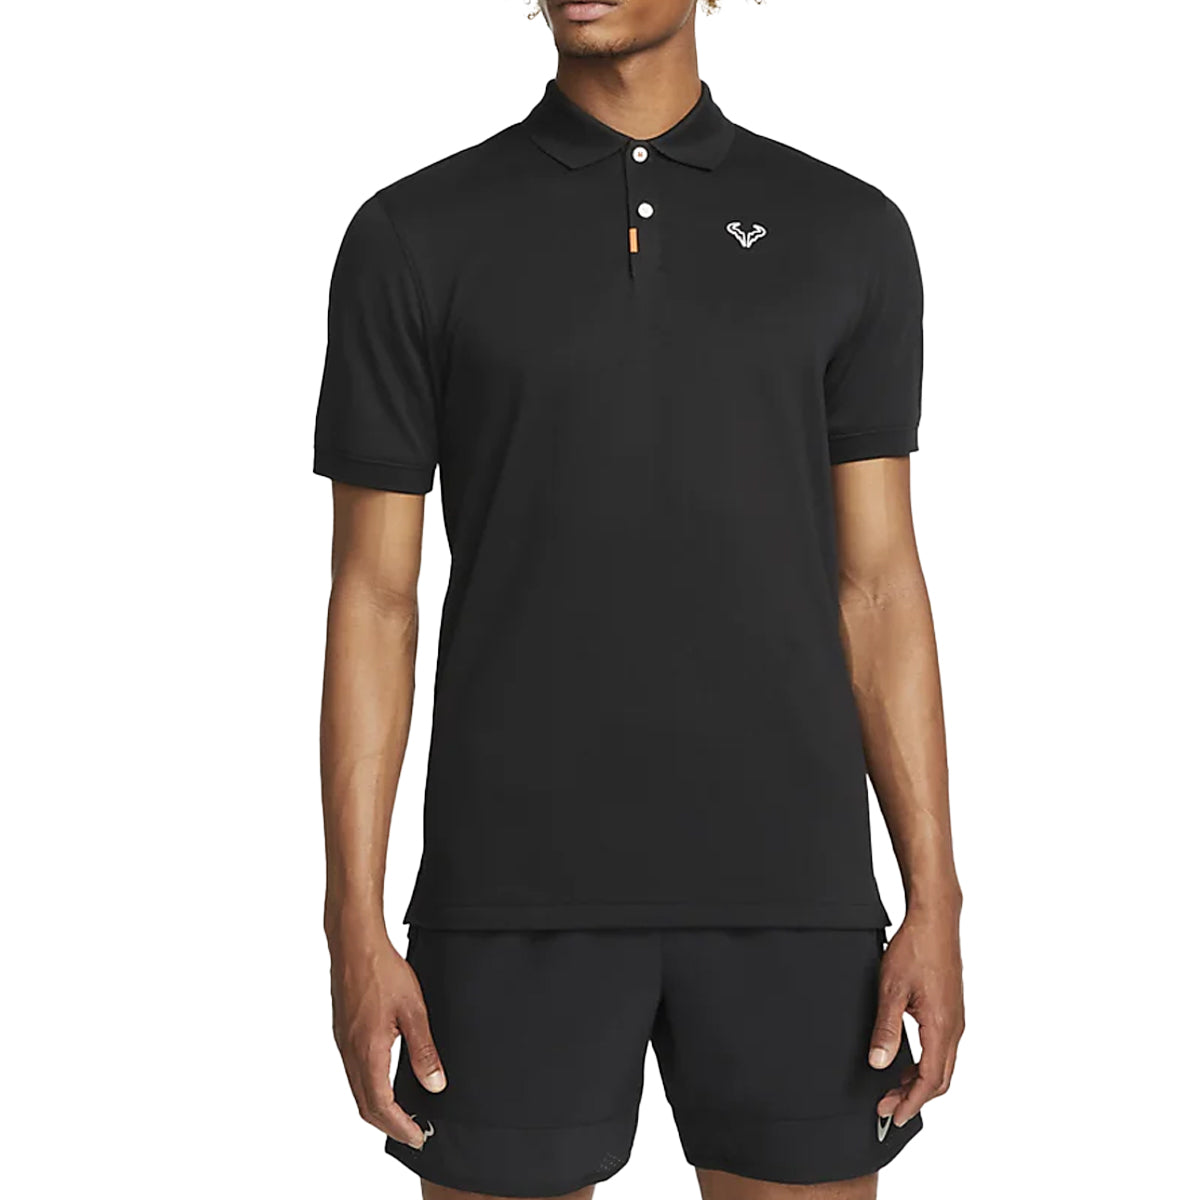 Nike Slim-Fit Rafa Polo (Men's) - Black/White